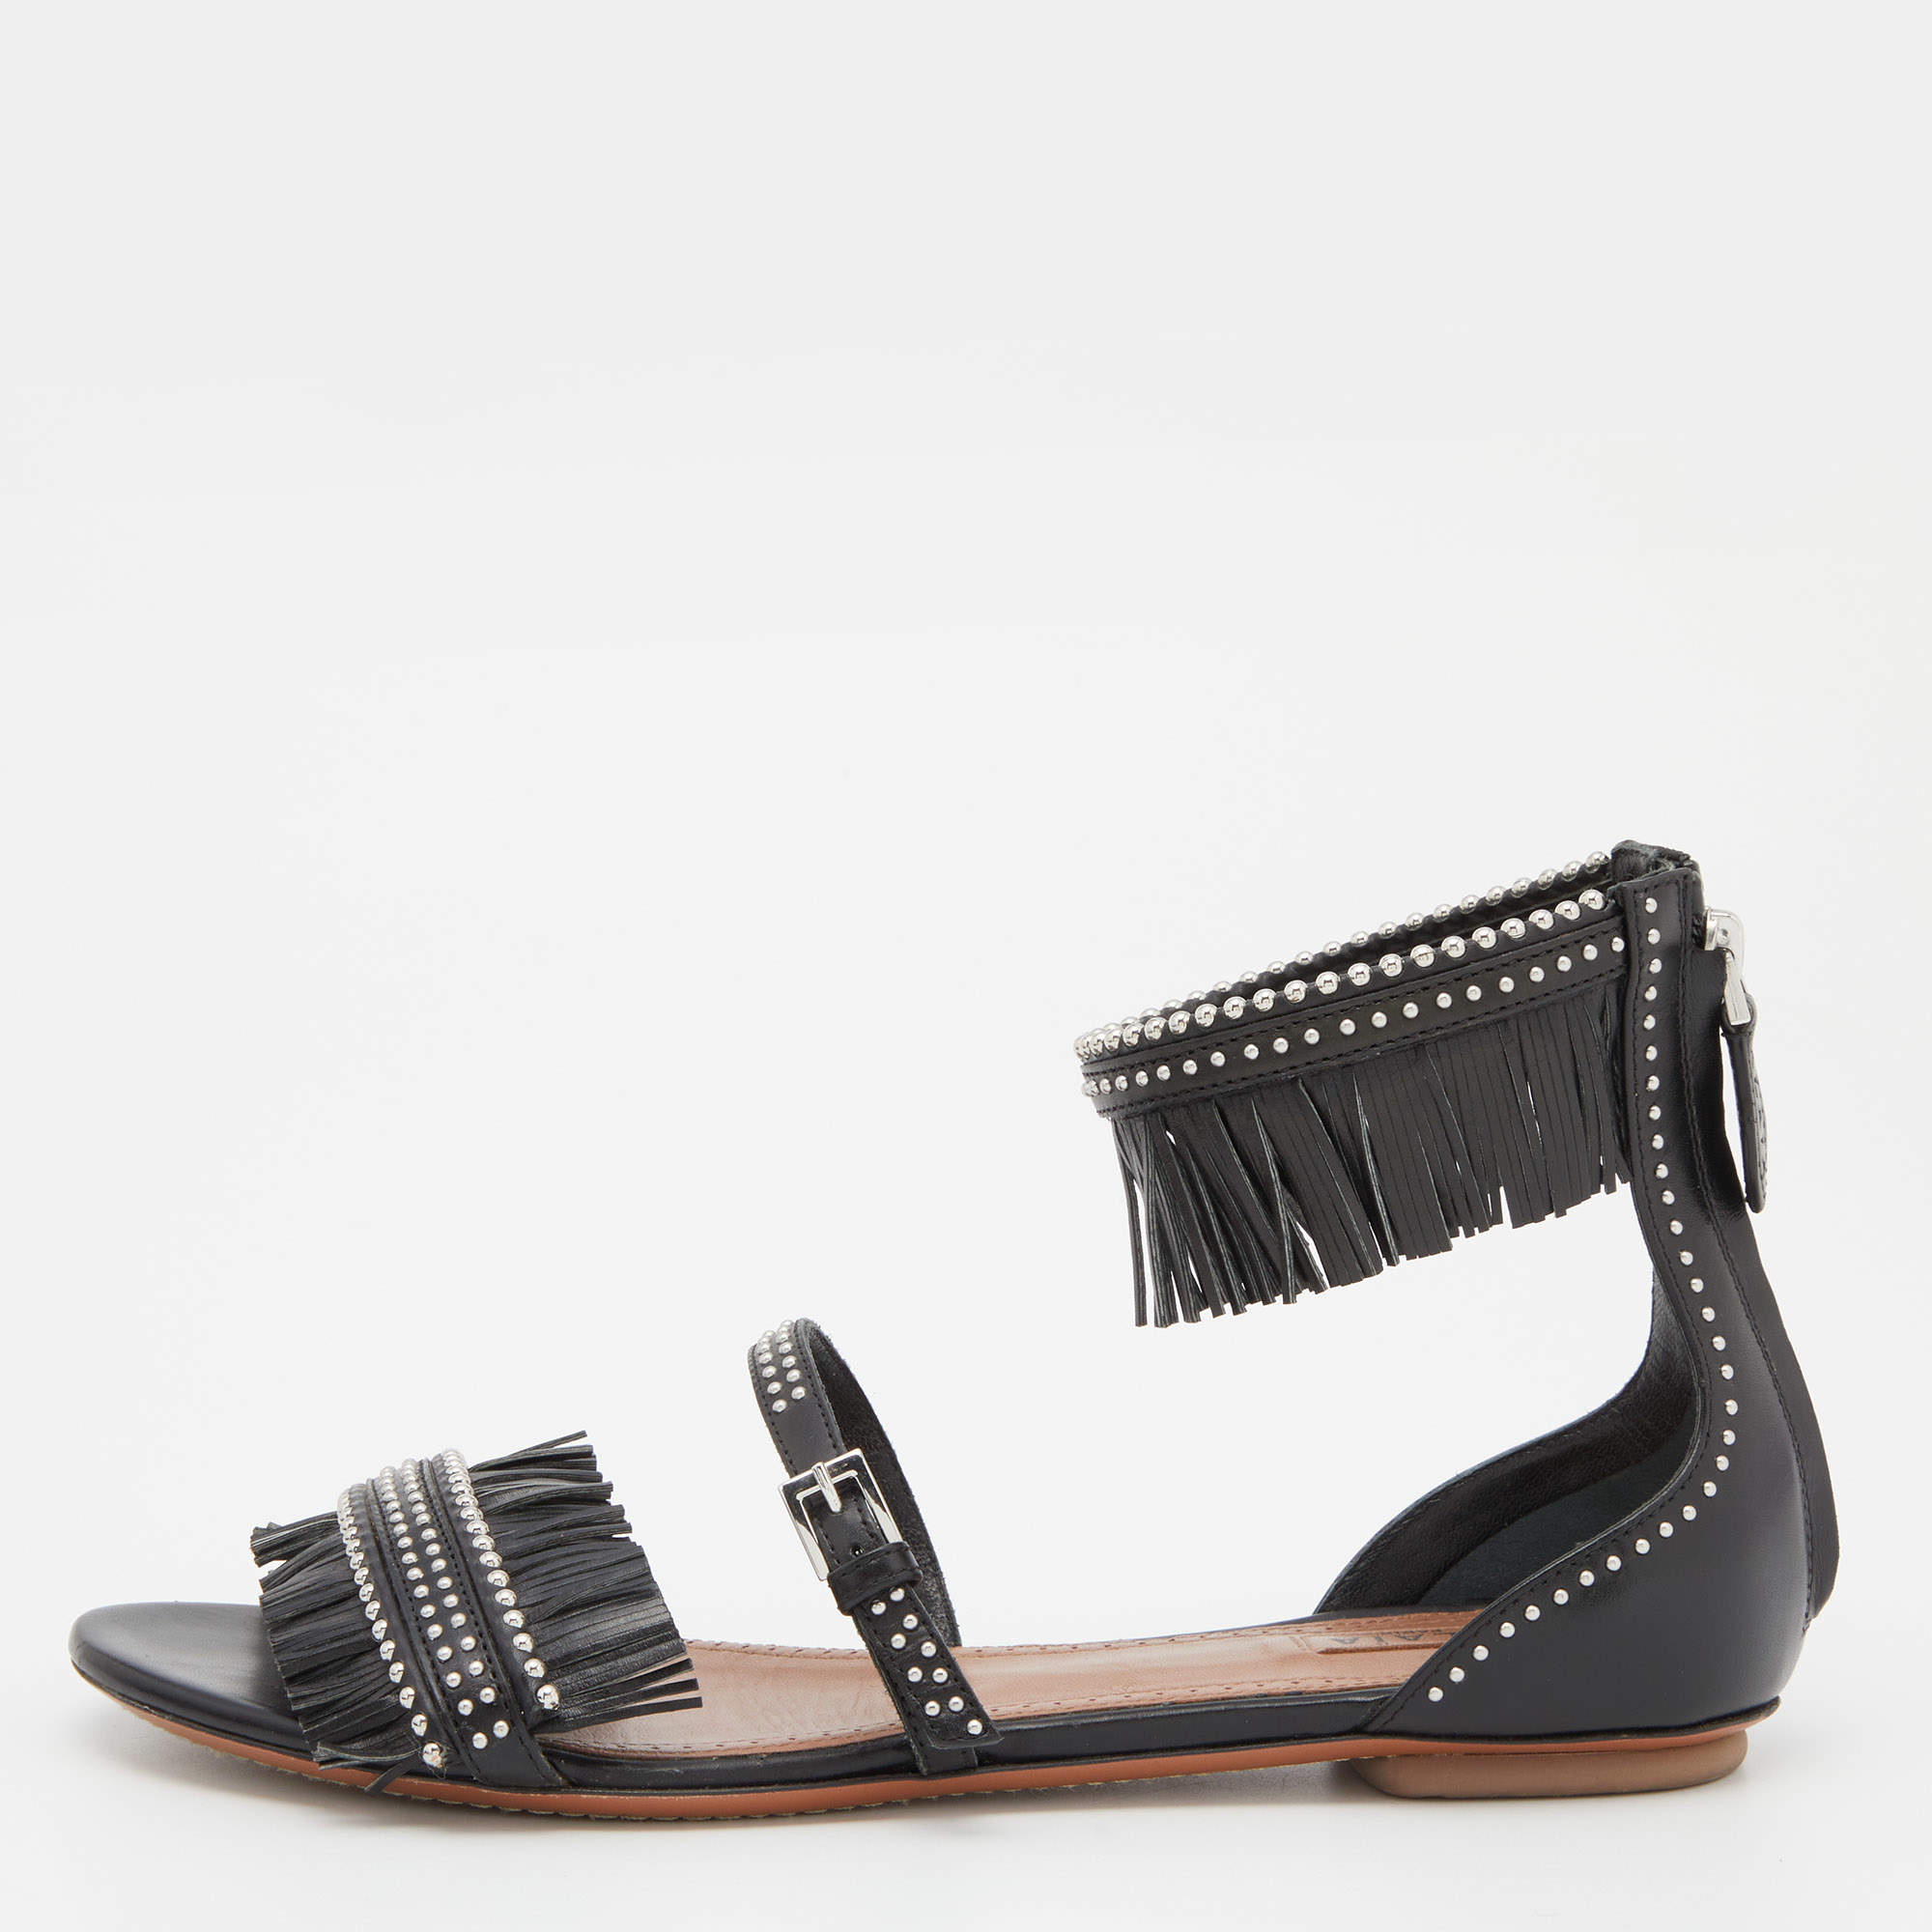 Alaia Black Leather Fringes Flat Sandals Size 38